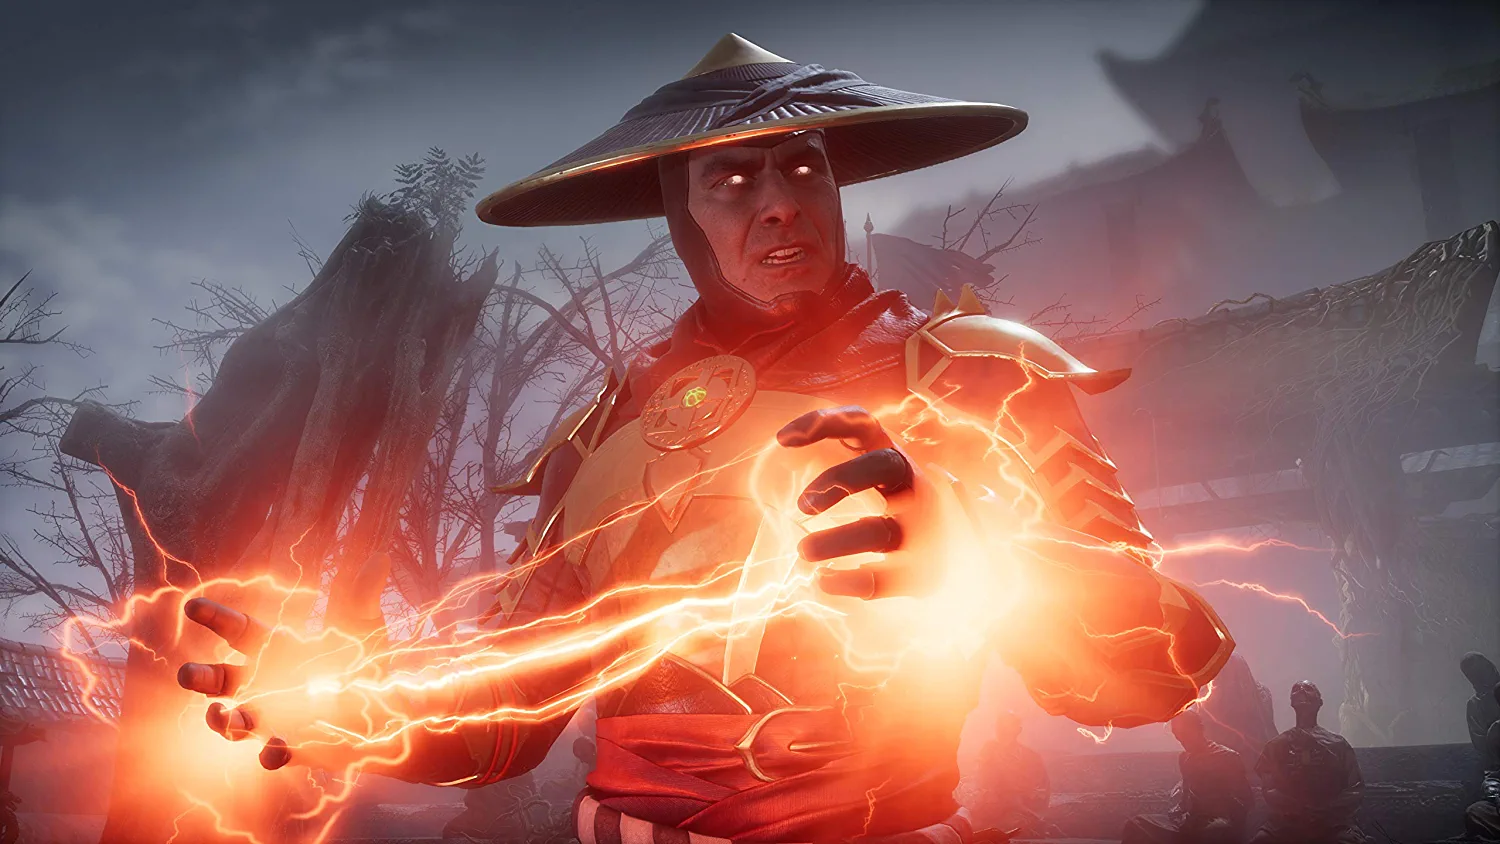 Mortal Kombat 11, Xbox One - image 2 of 5